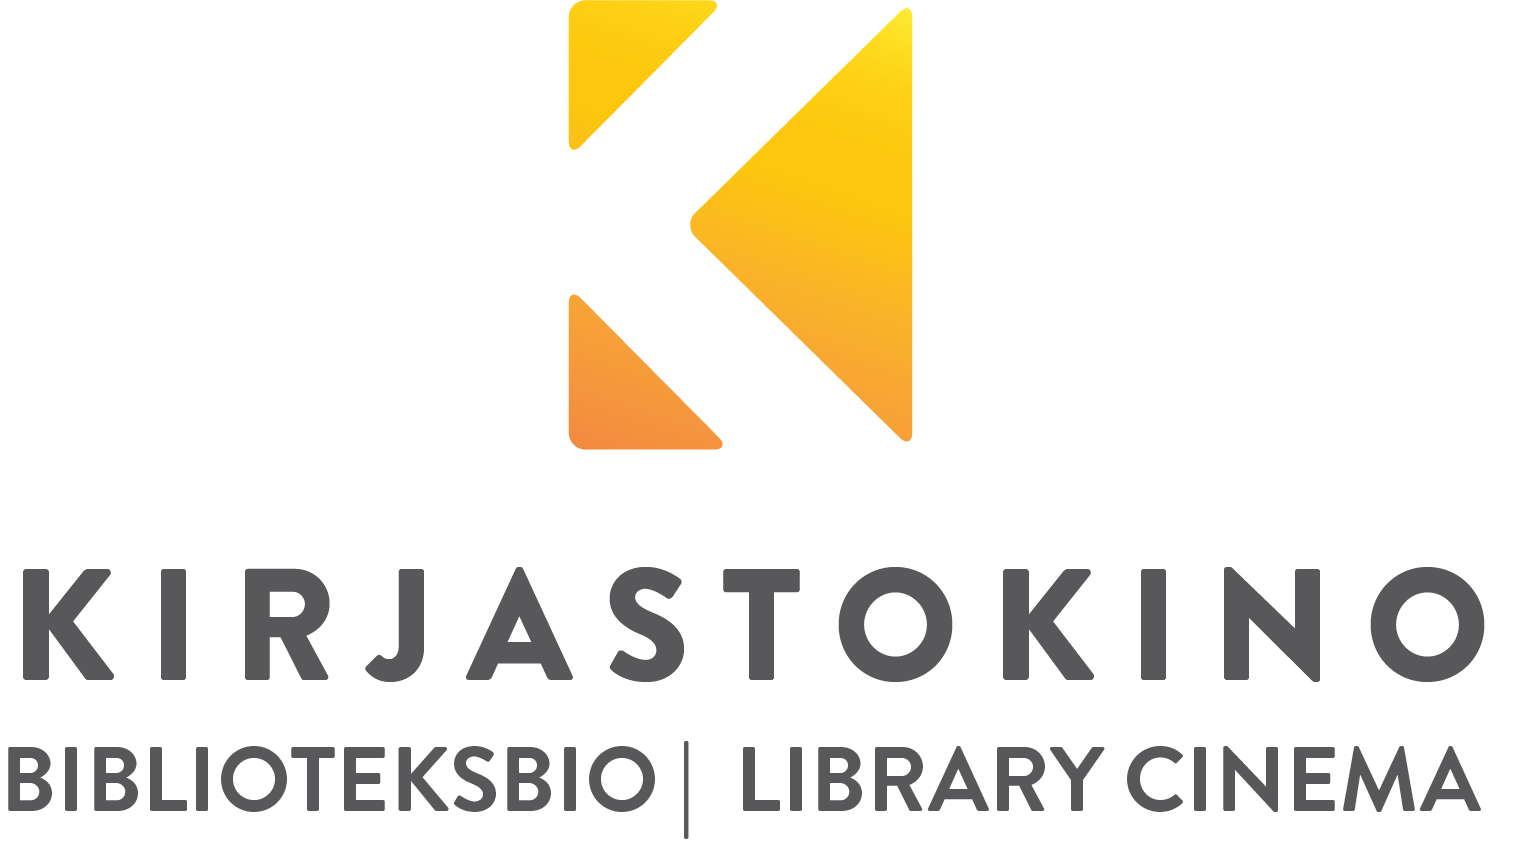 Kirjastokinon logo